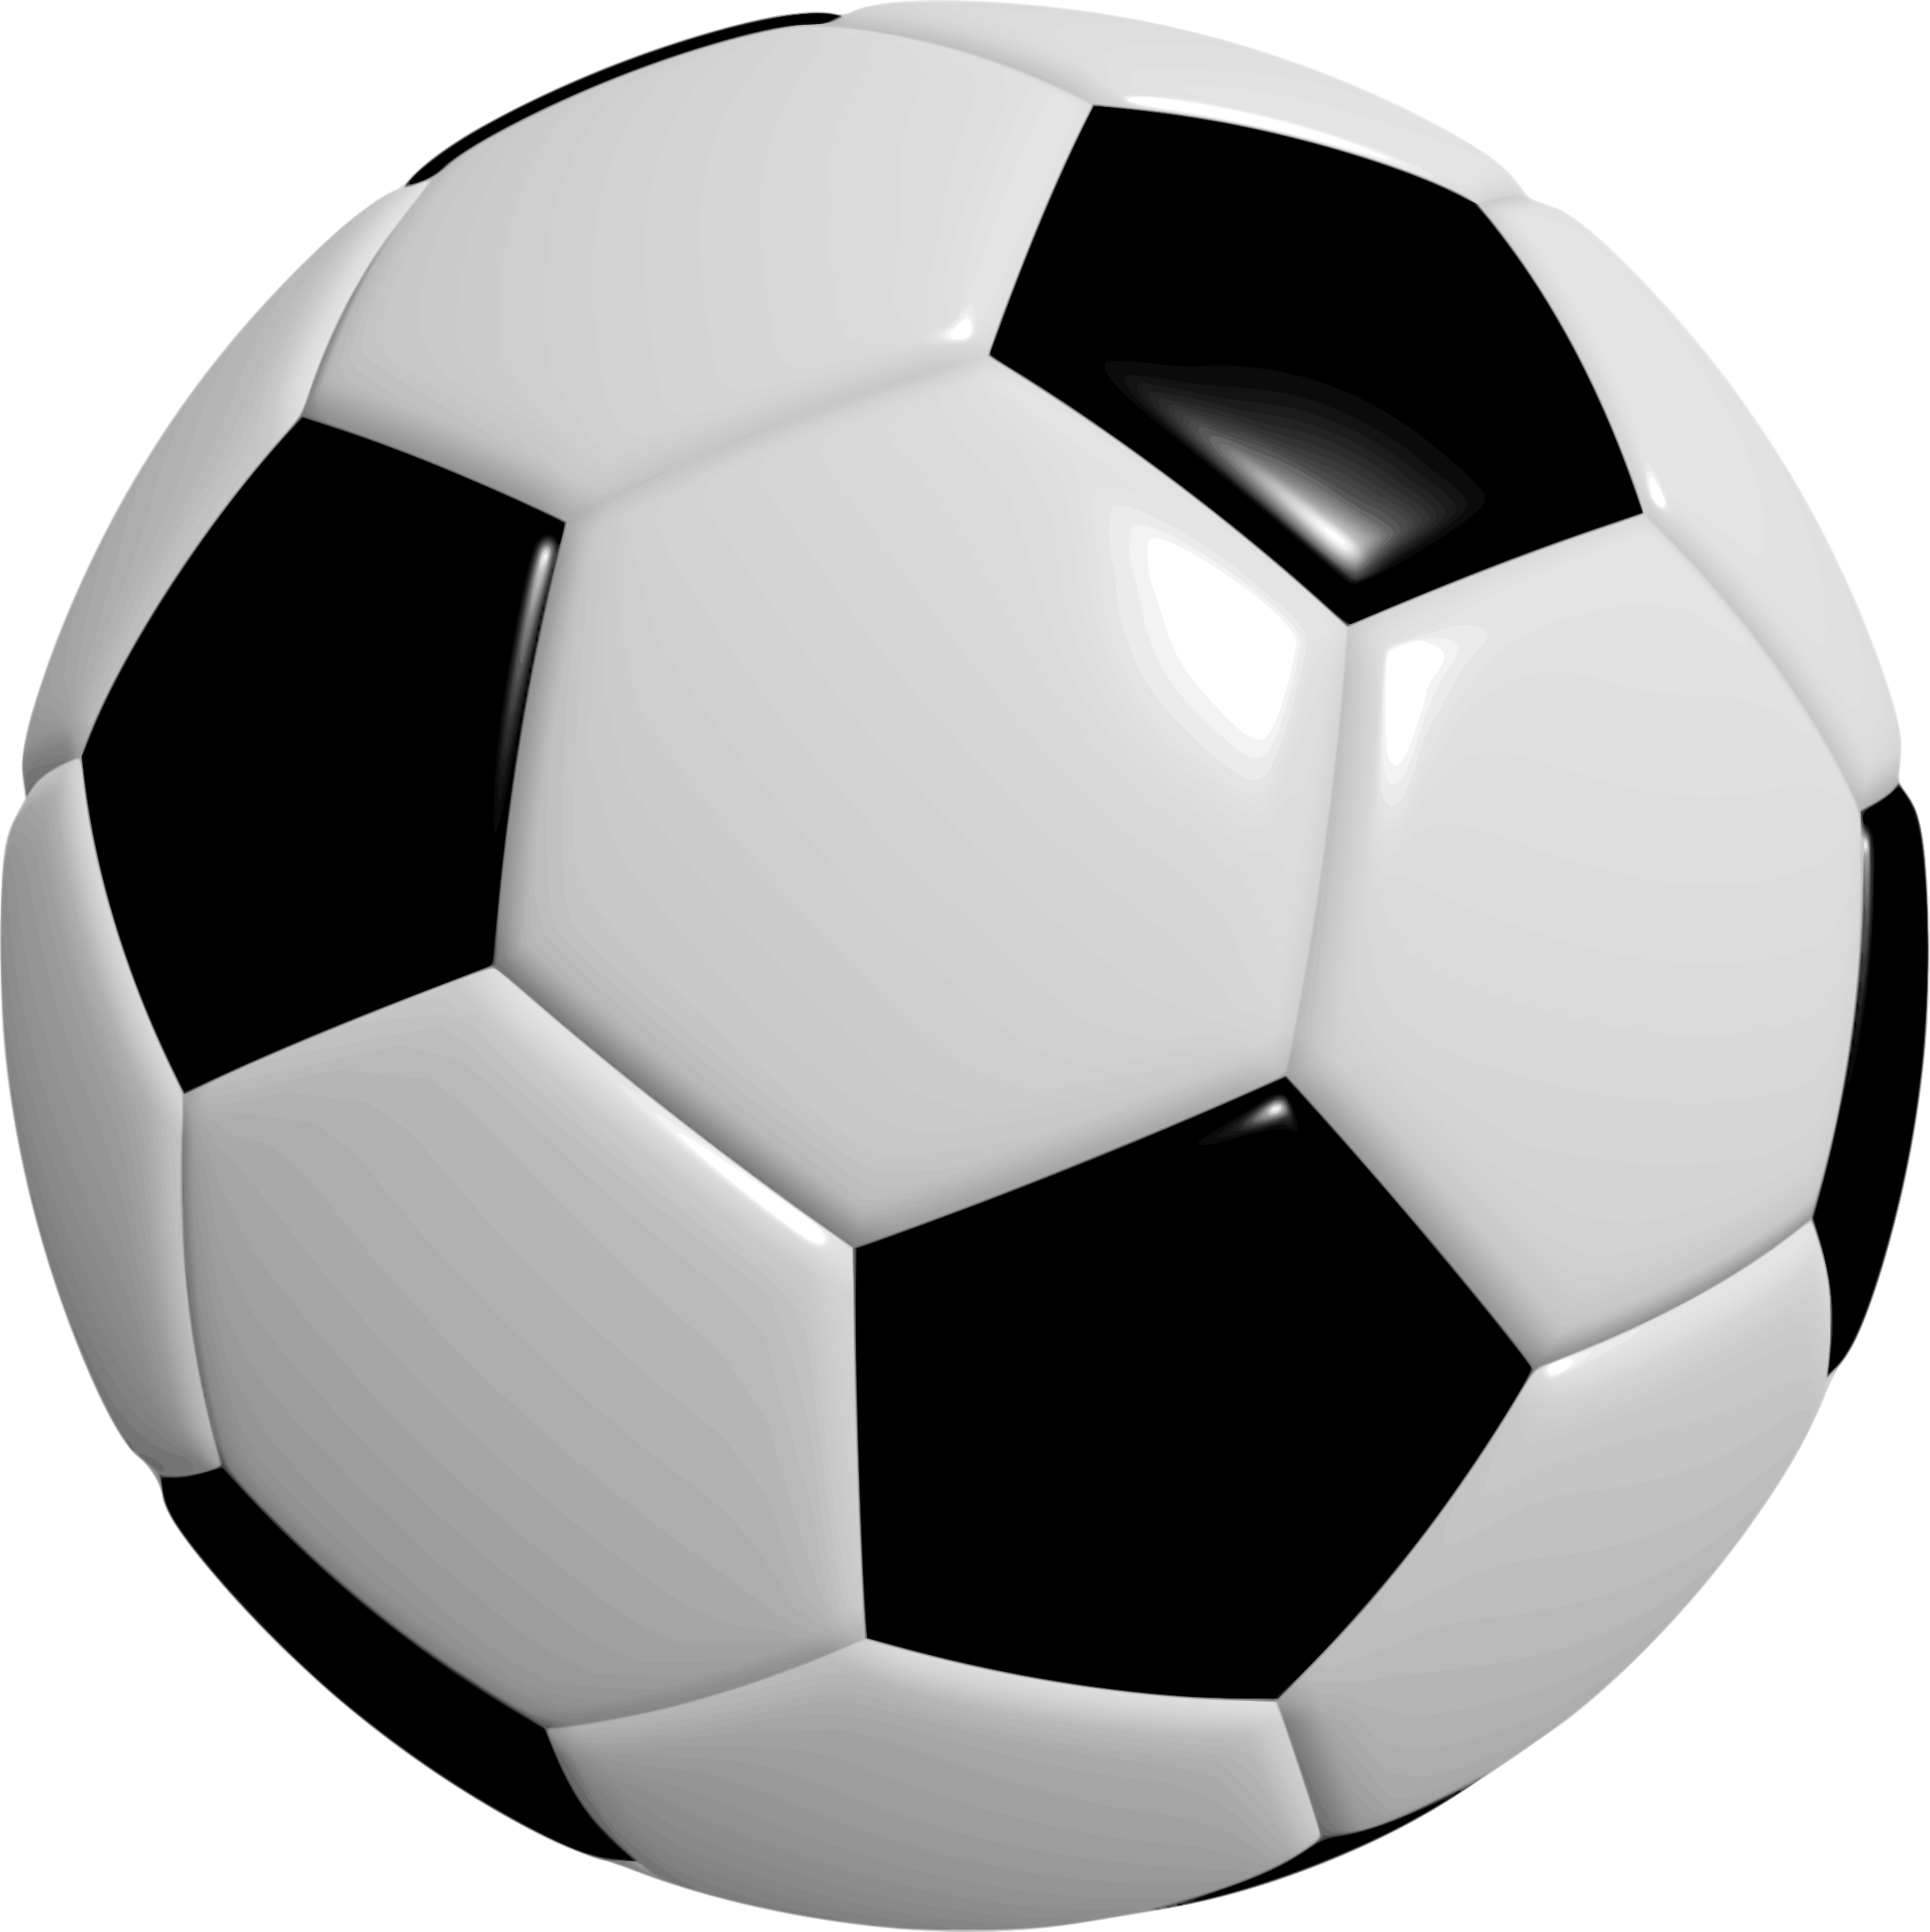 Futbolo kamuolys